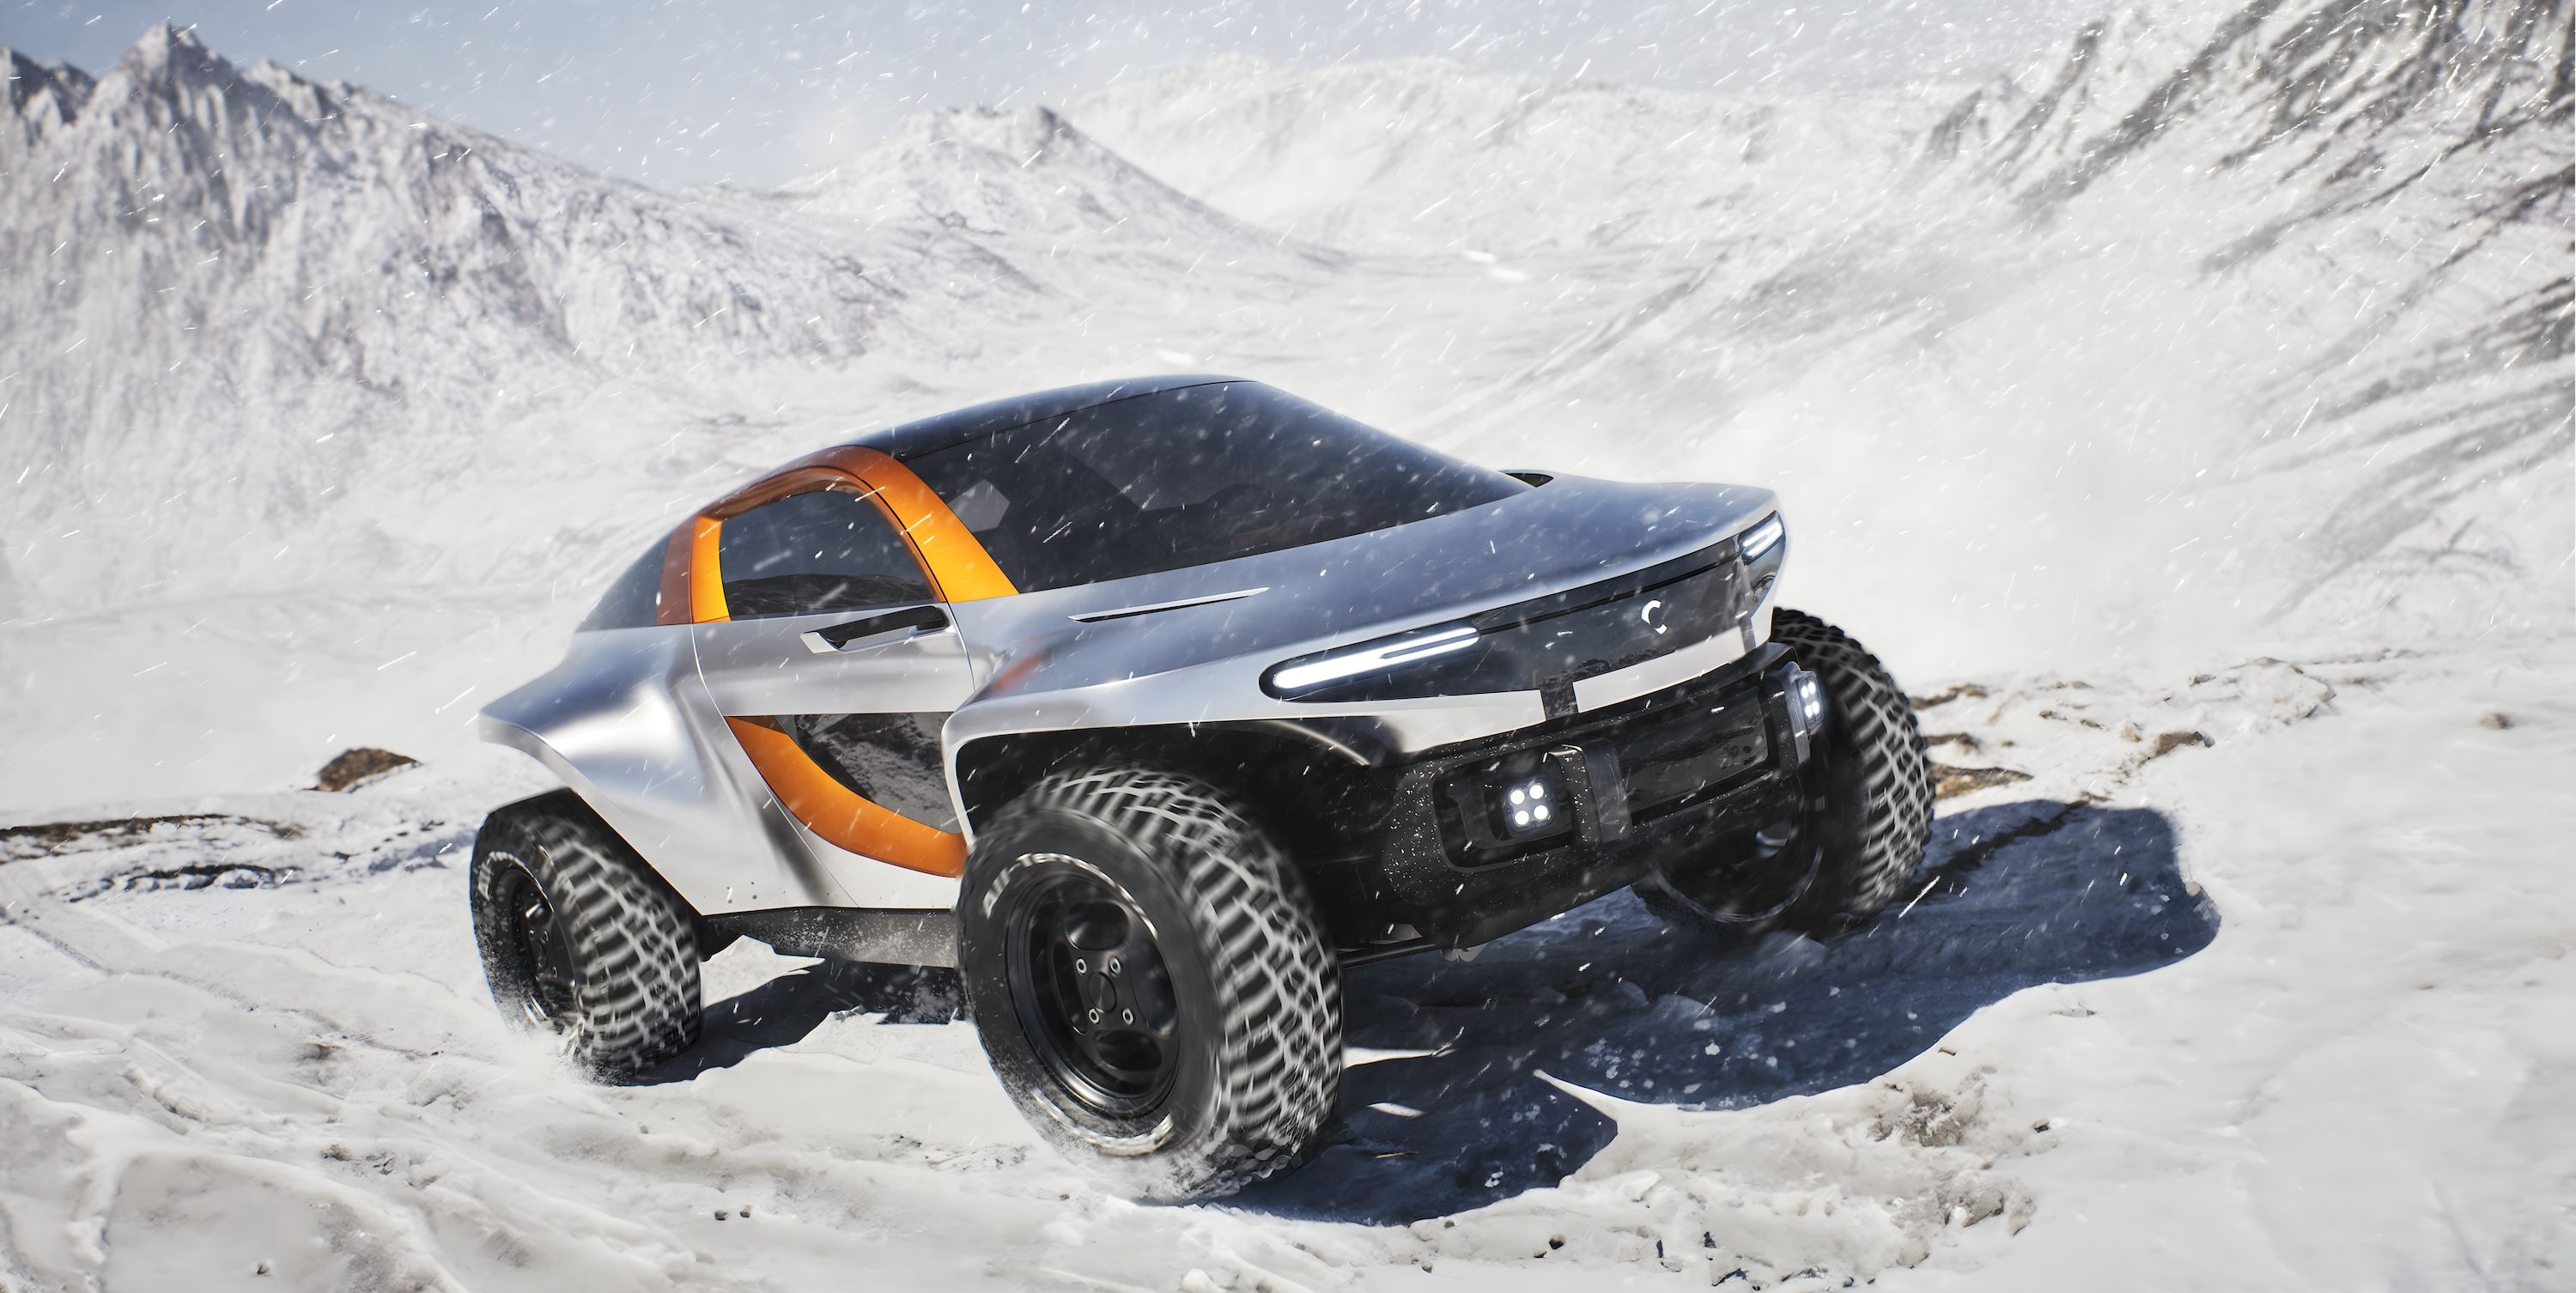 Design Legend Ian Callum's New Project Is a Trail-Spec EV Coupe